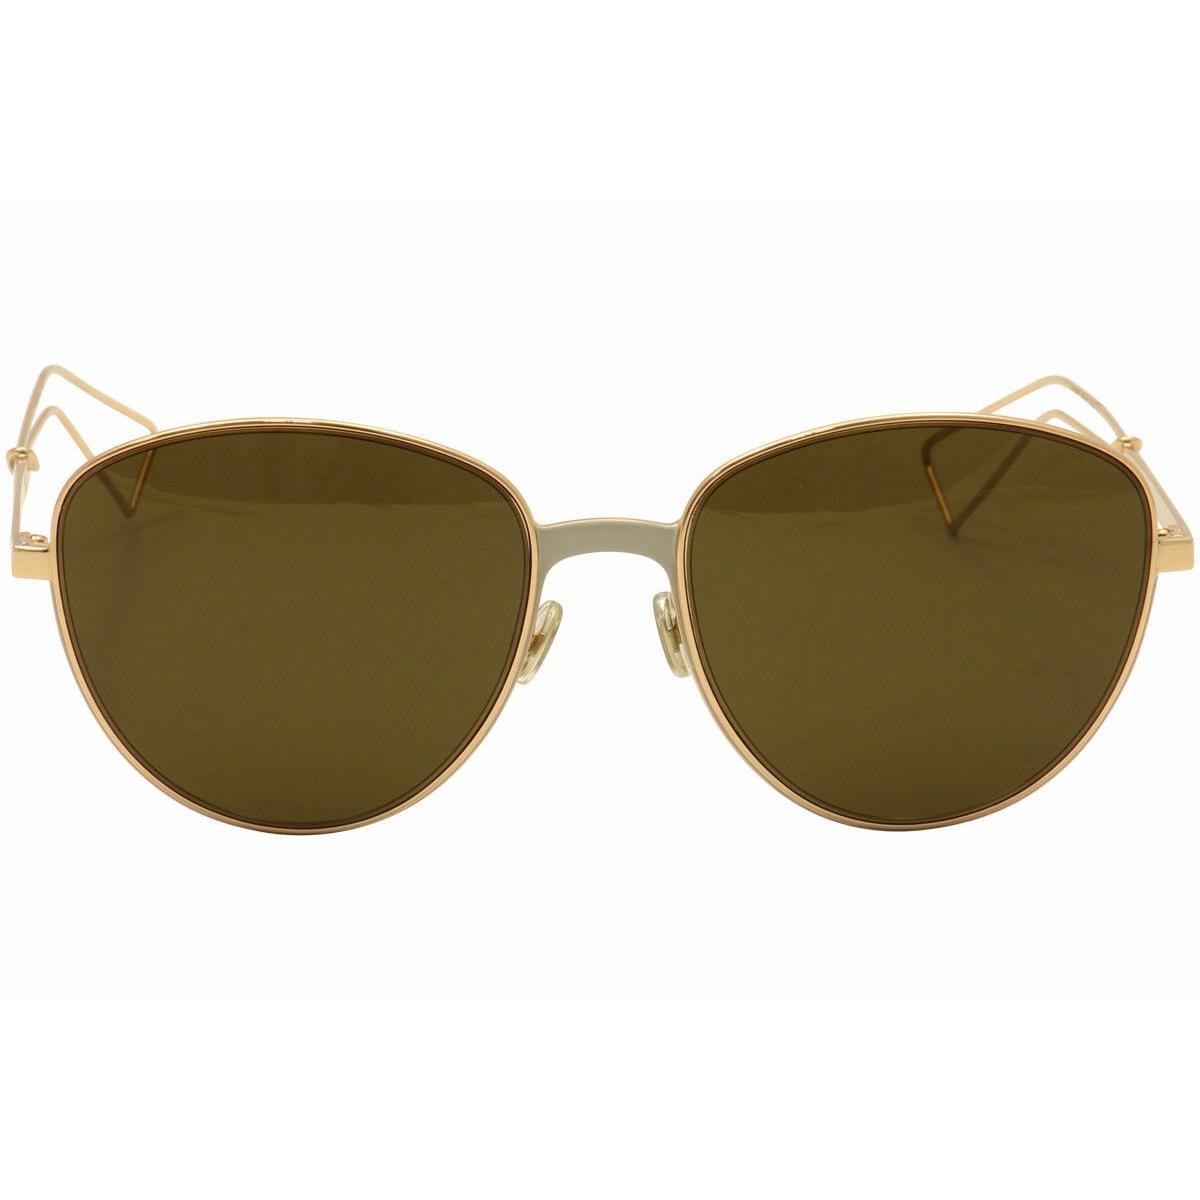 Dior sunglasses ULTRASRCXEC - Gray , Gold/ Matte Gray Frame, Brown Lens 5